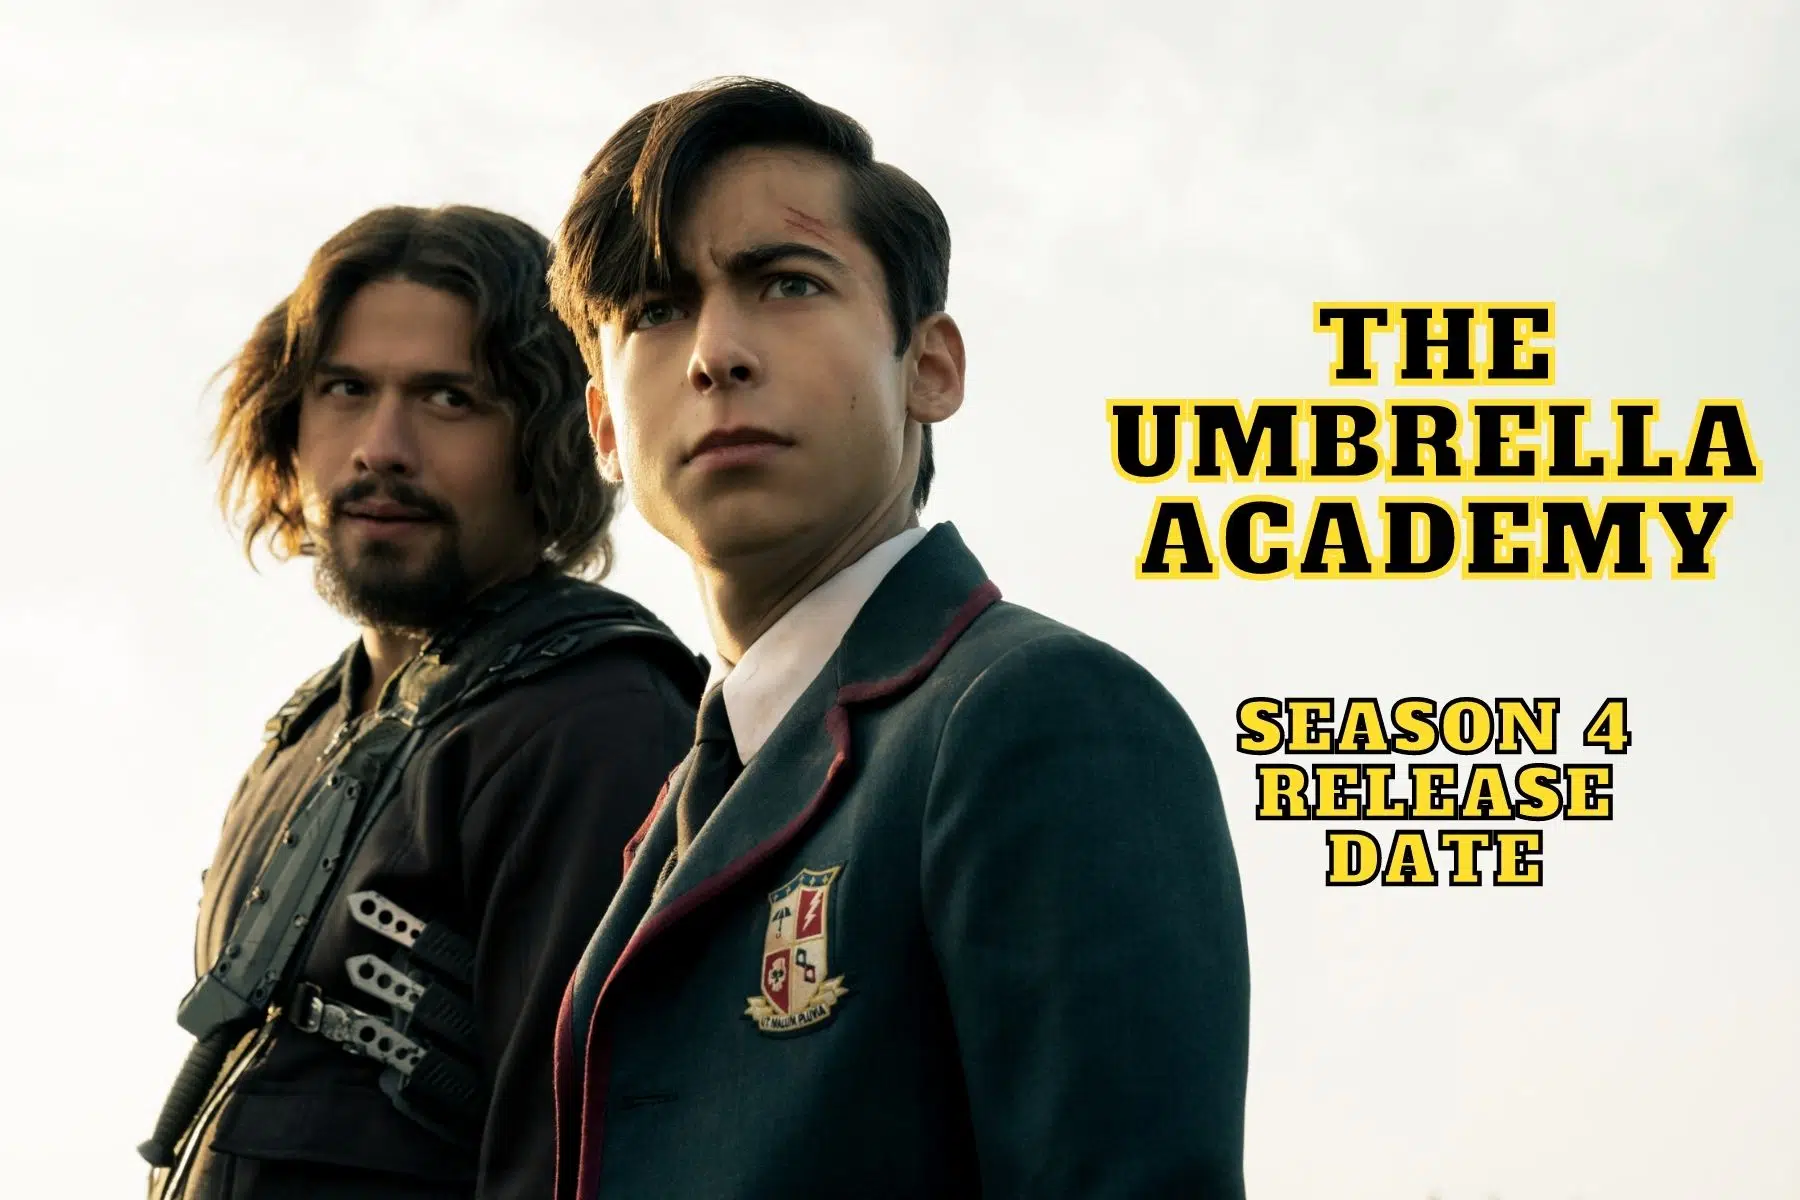 The Umbrella Academy Season 4 Release Date, Trailer